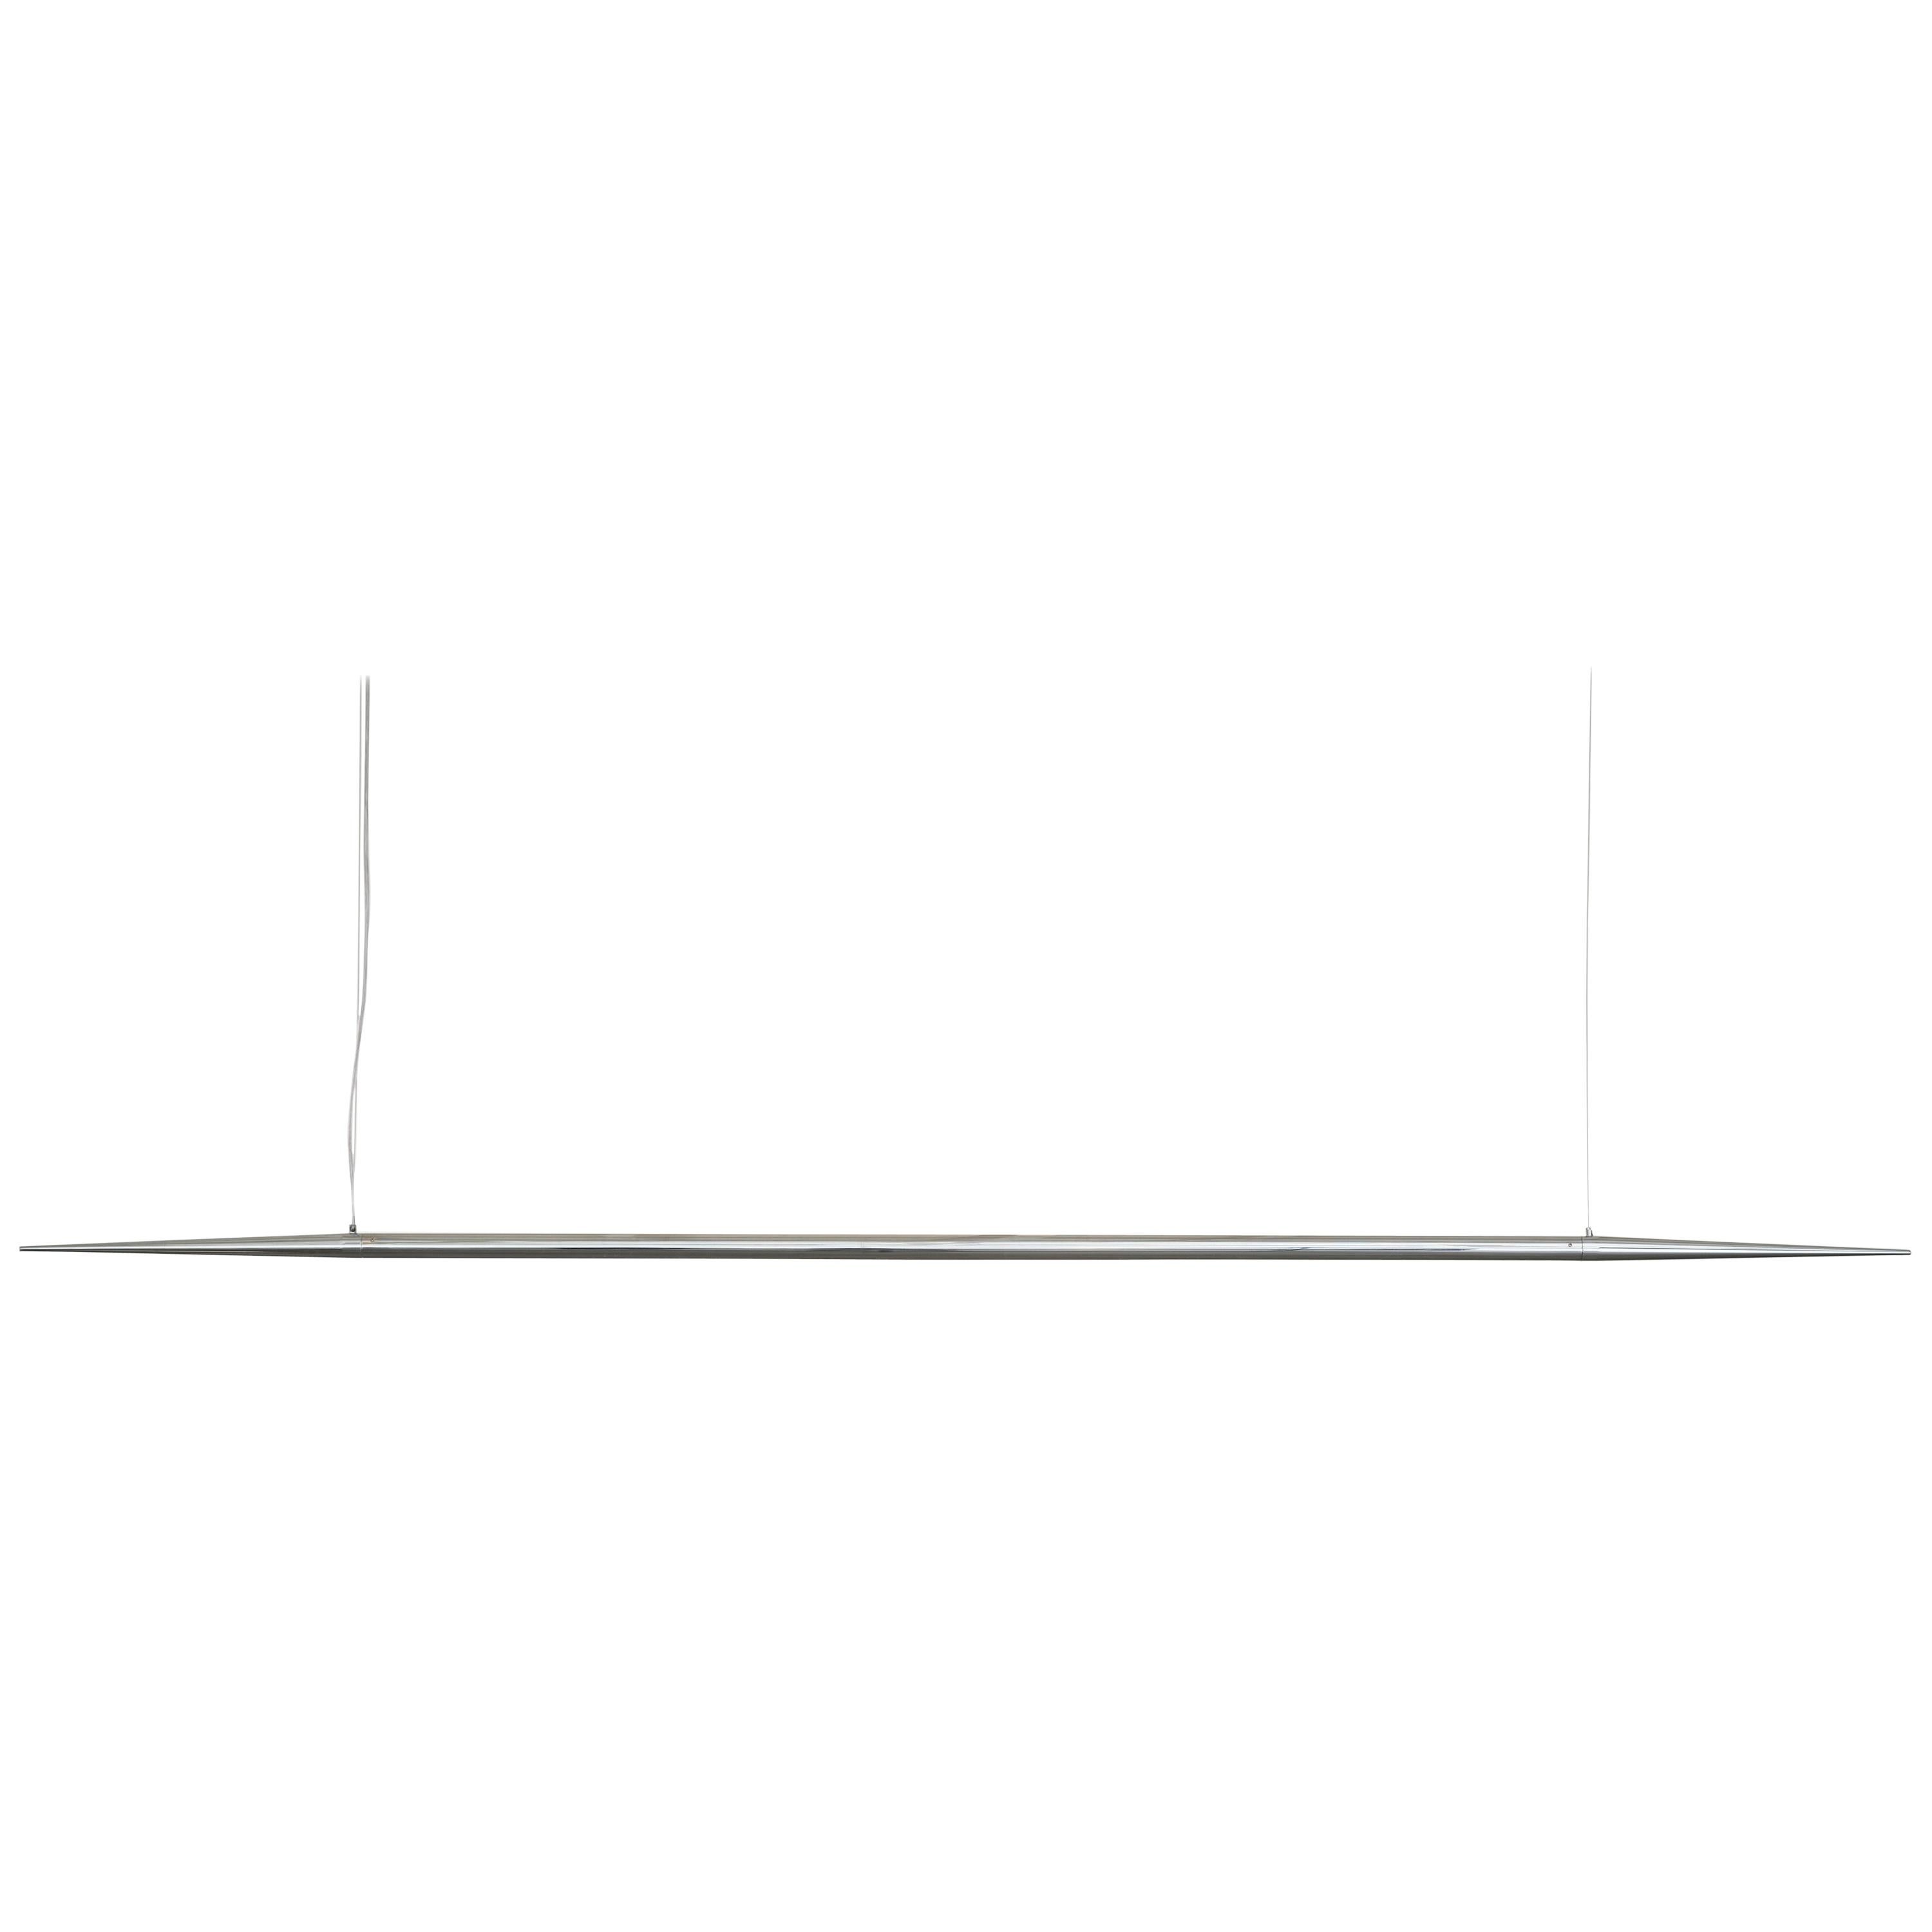 Ferrão Pendant Lamp, 150cm, by Rain, Contemporary Lamp, Aluminium, Chrome